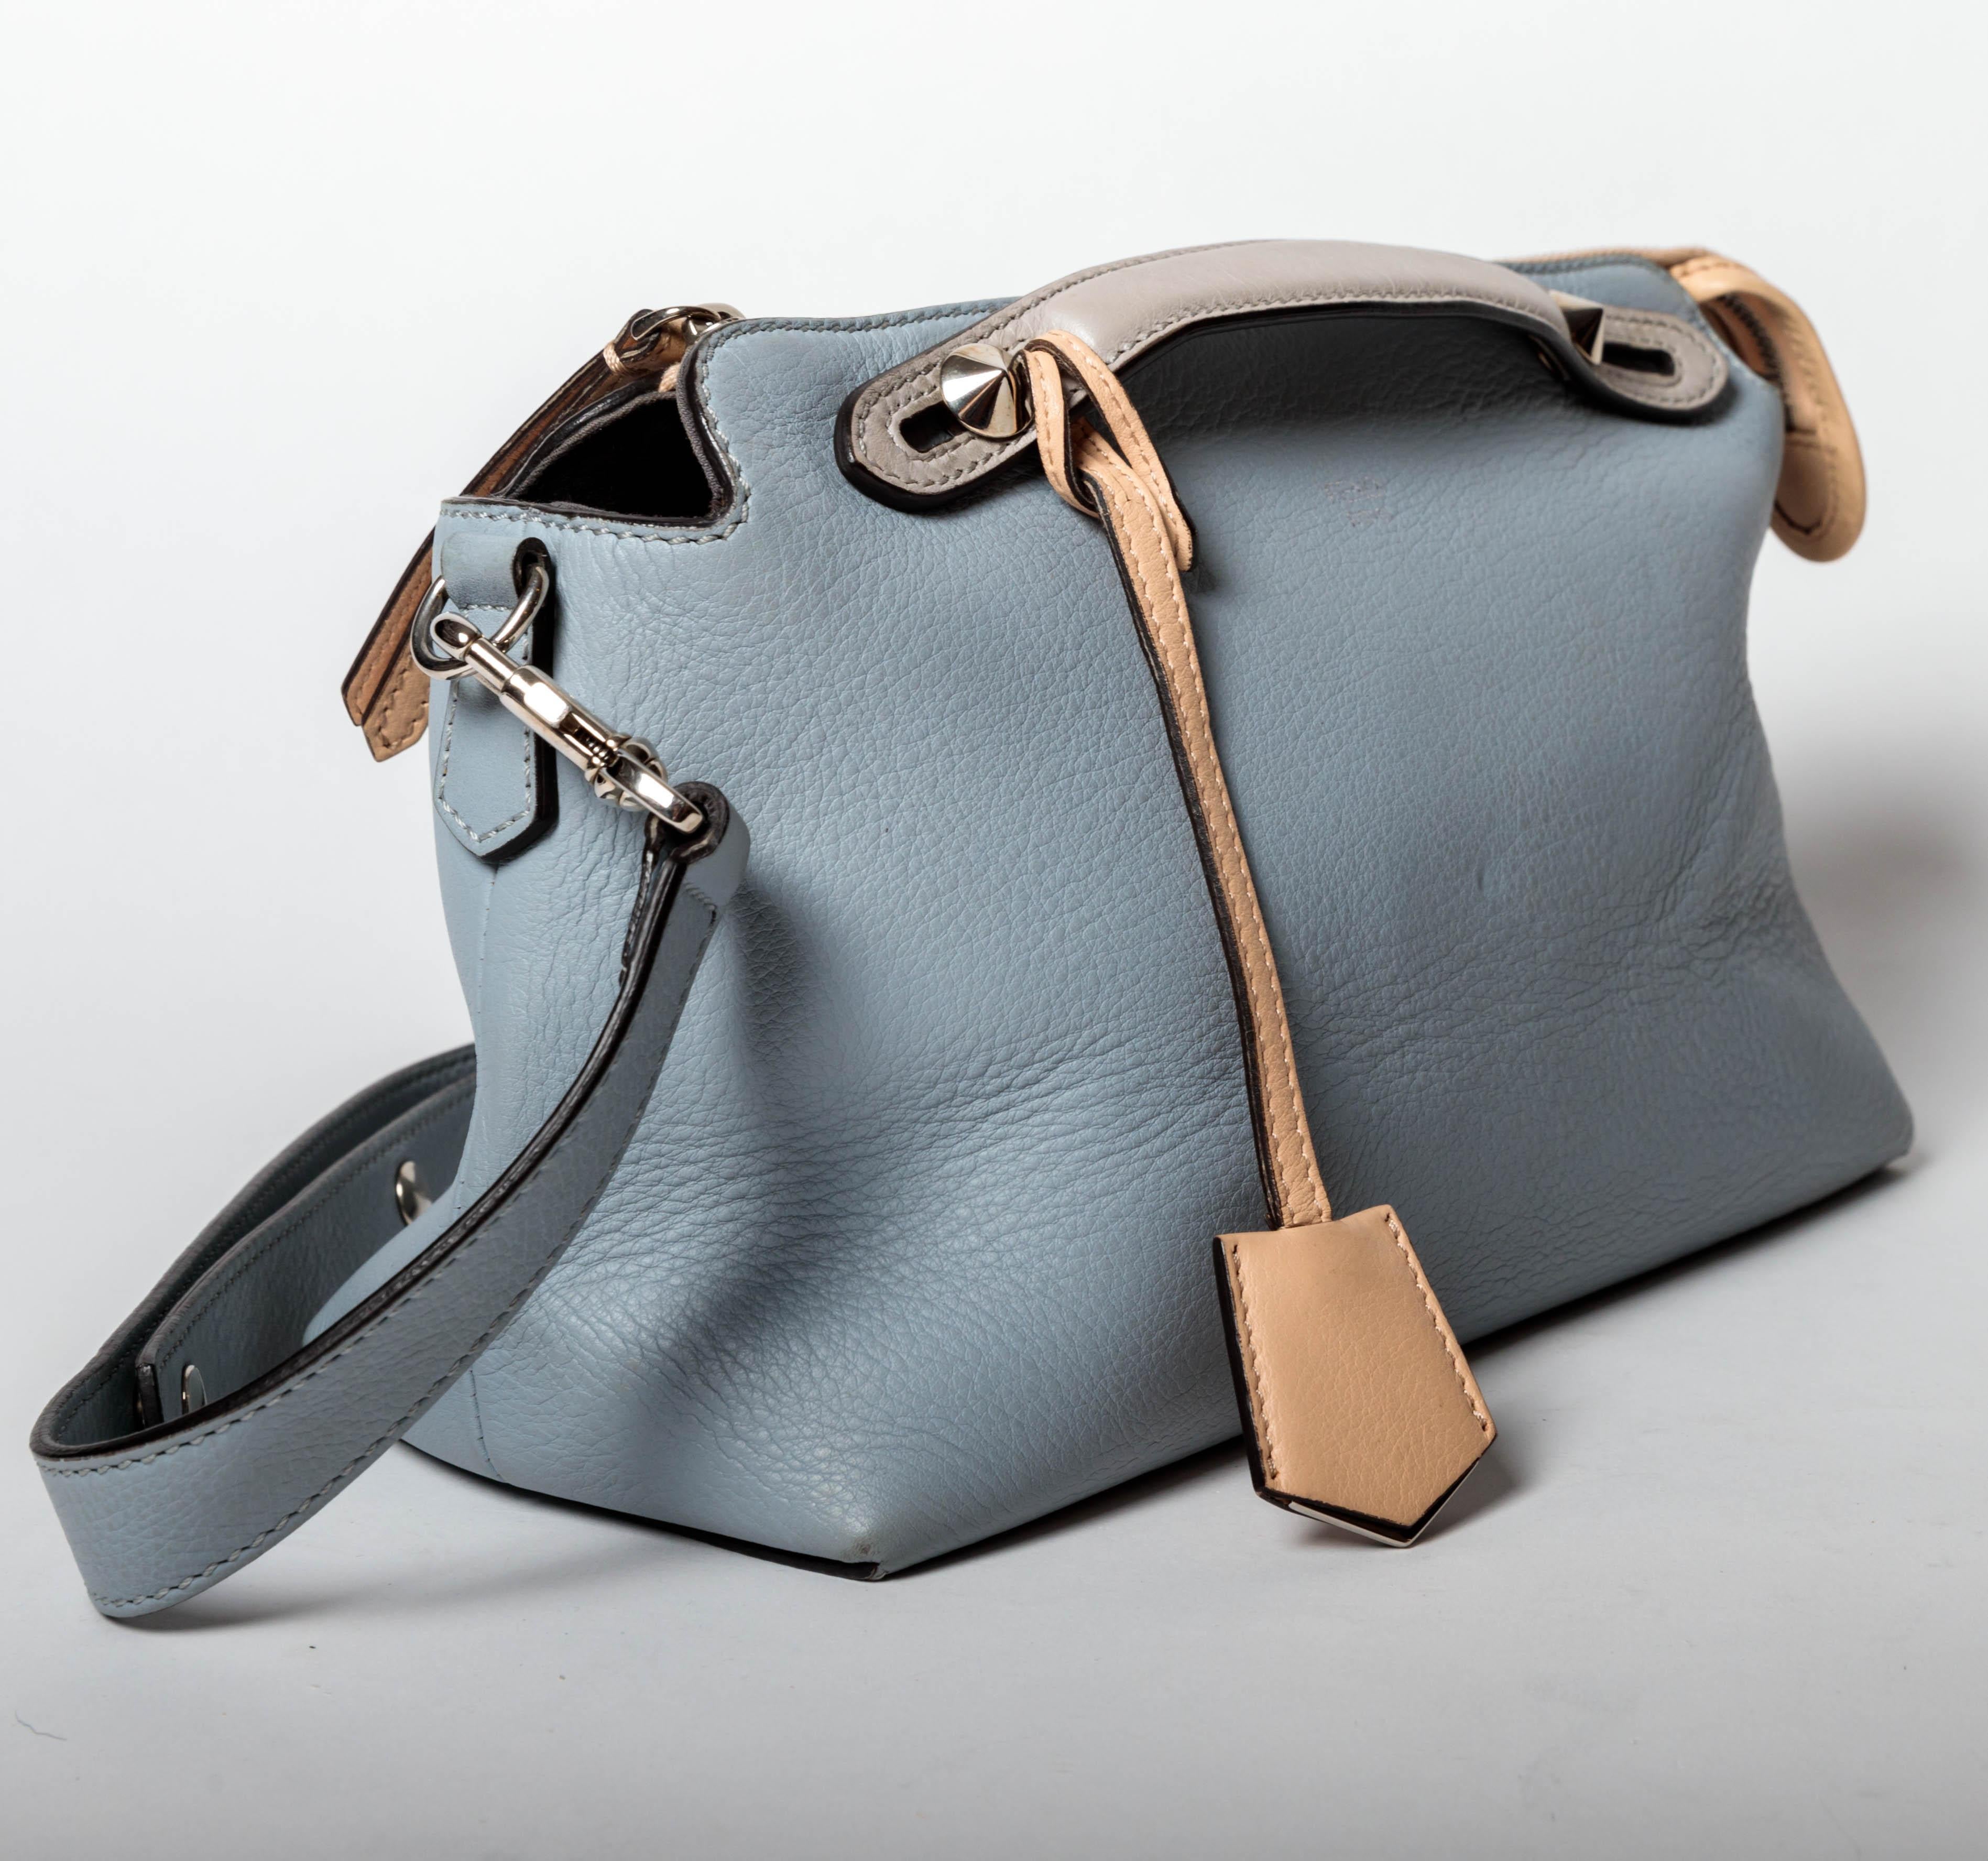 Women's Fendi Top Handle Ice Blue Leather Bag with Detachable Shoulder Strap  For Sale